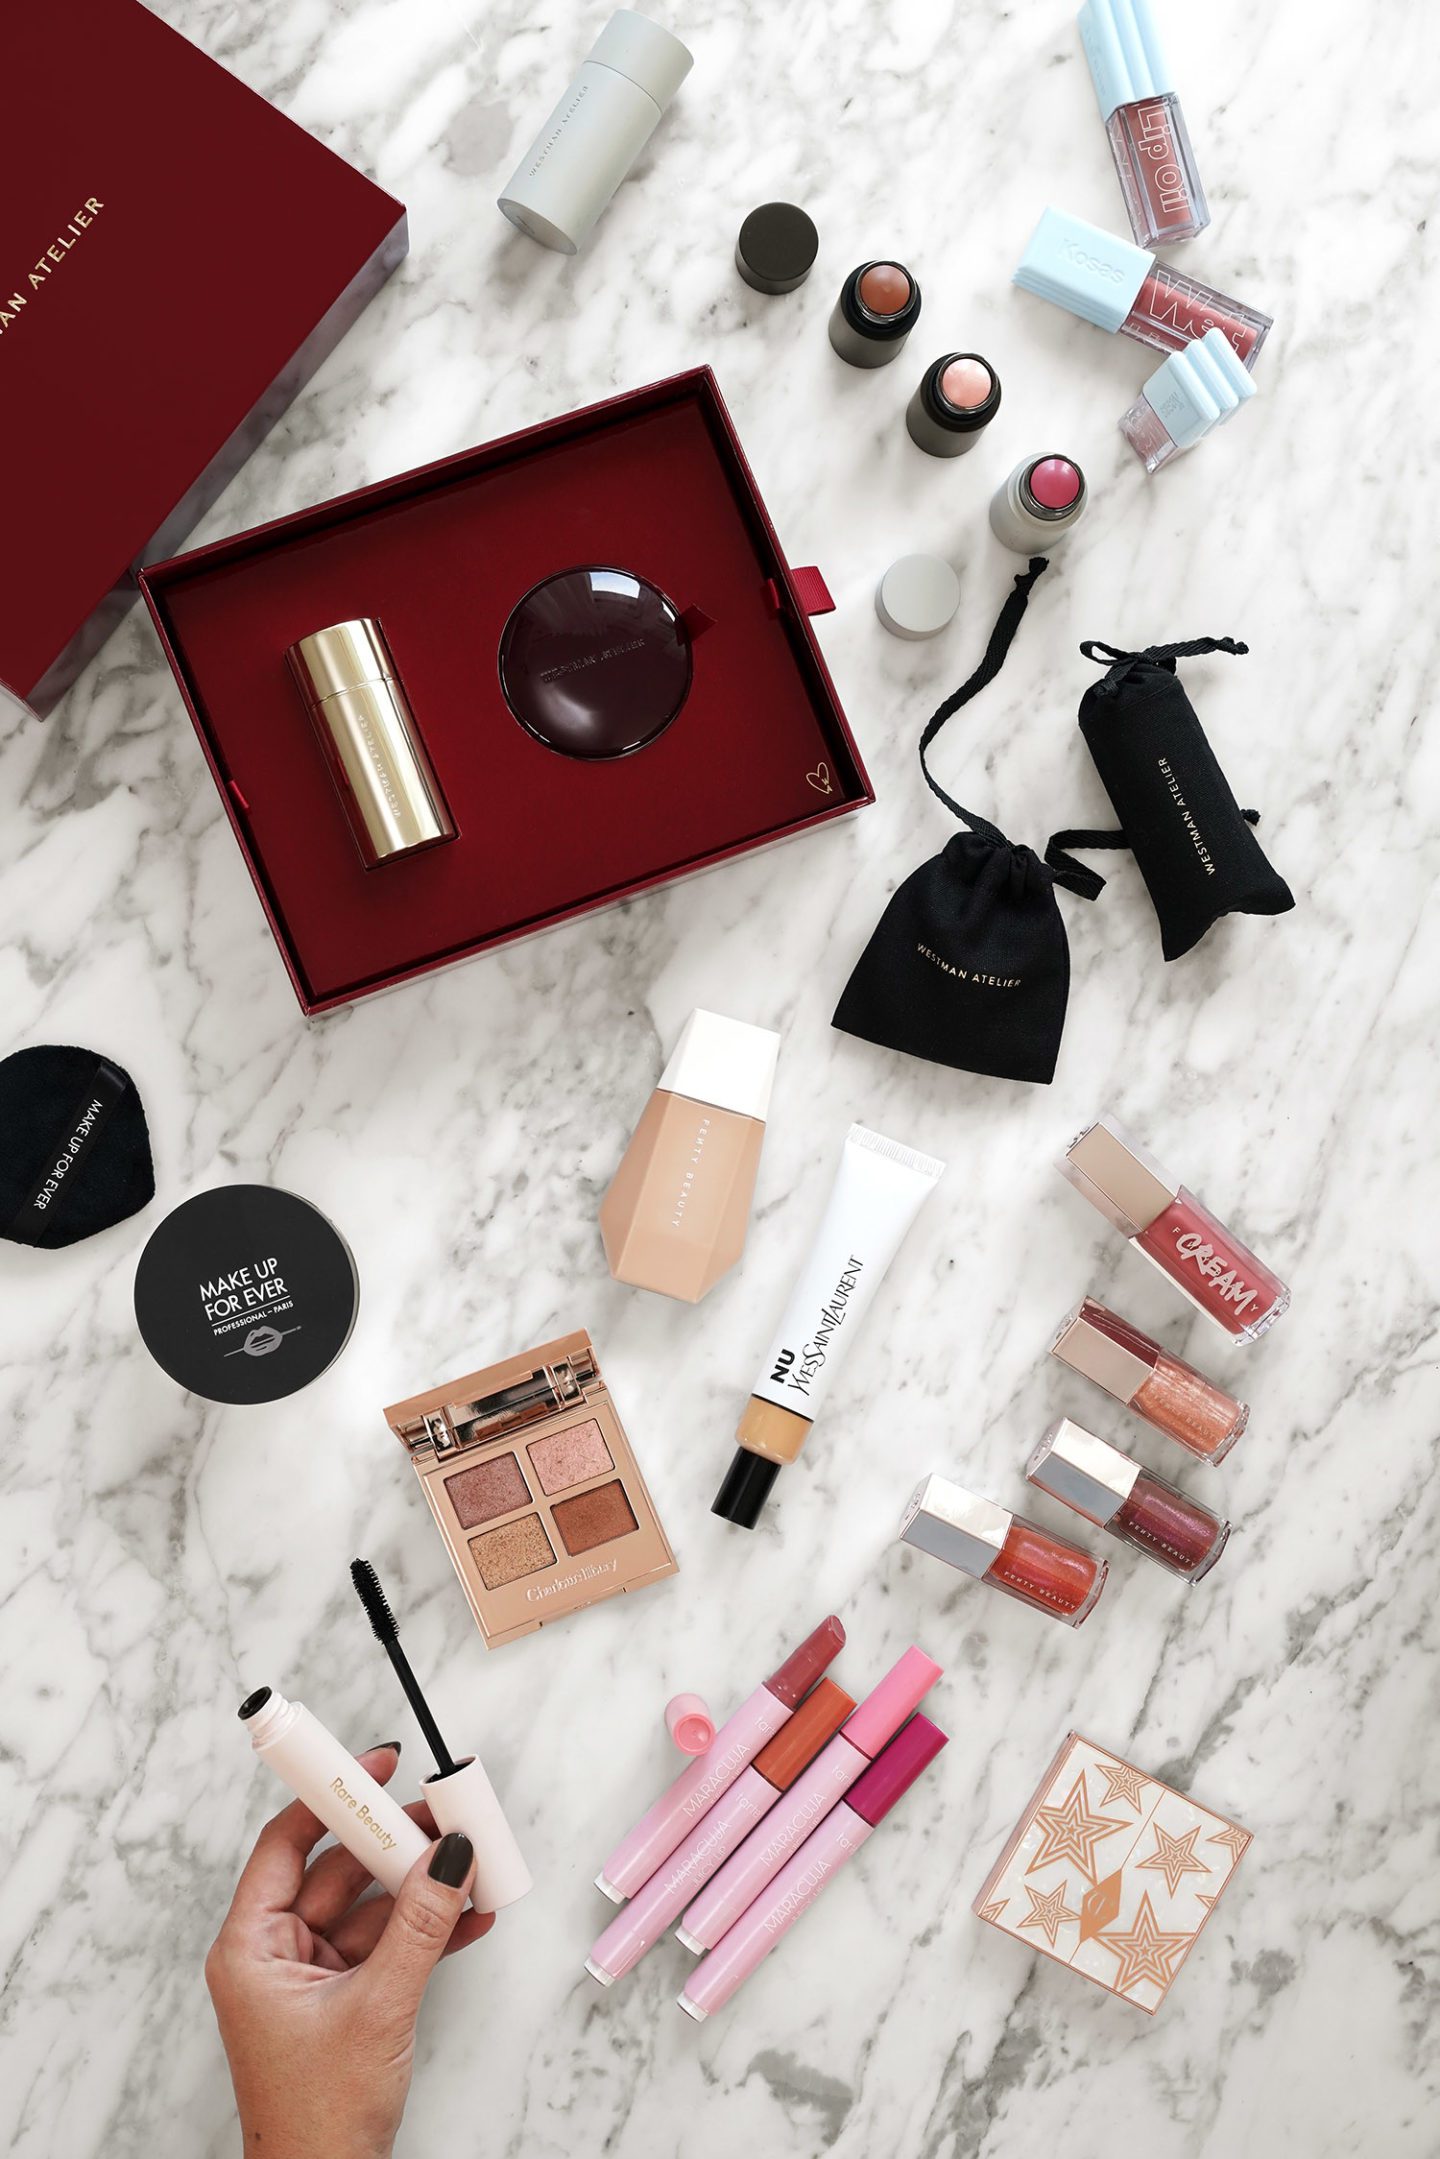 Sephora Makeup Haul | The Beauty Lookbook